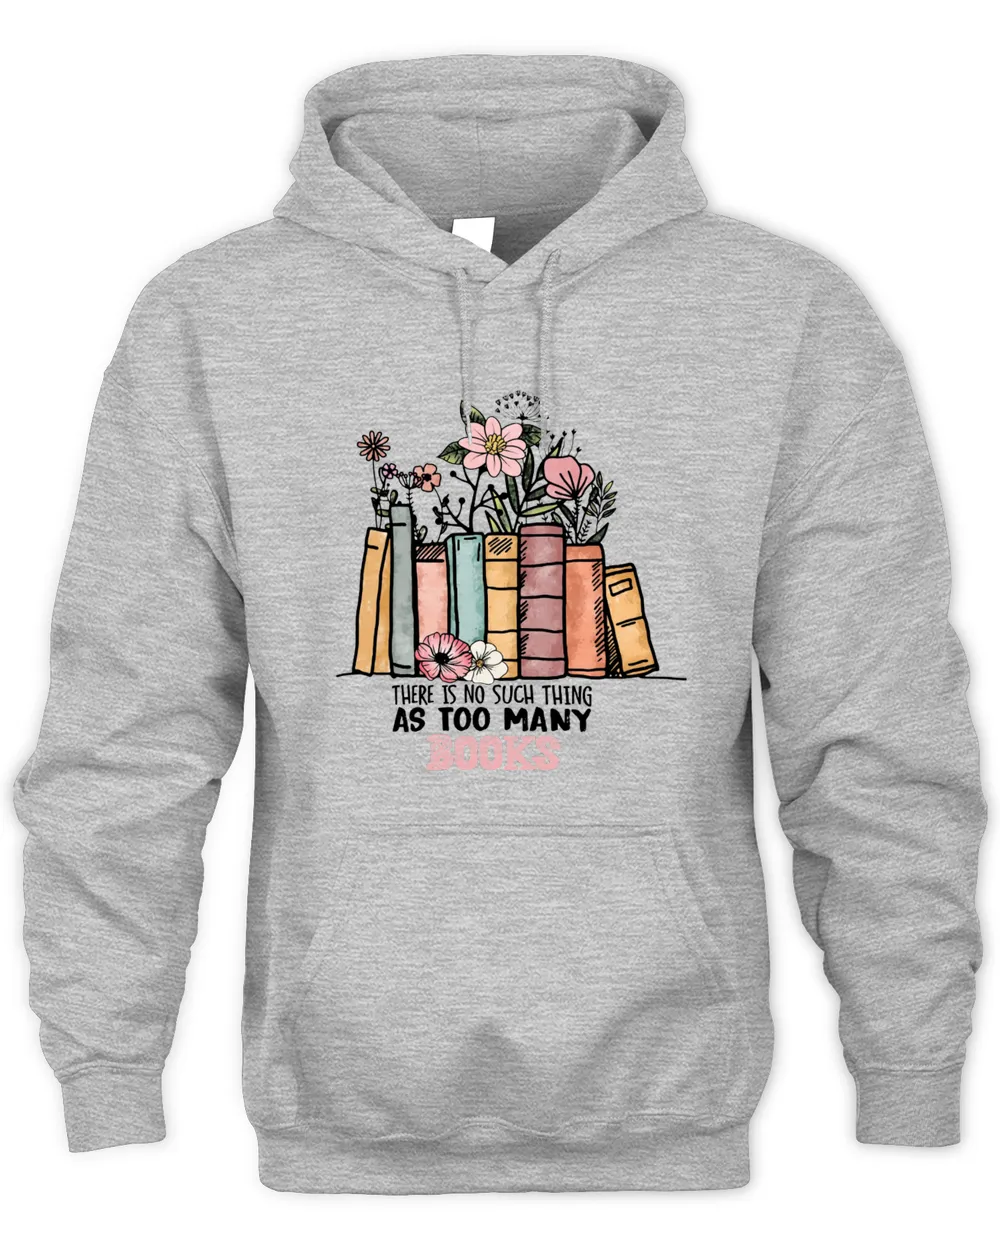 Thing As Too Many Books Shirt